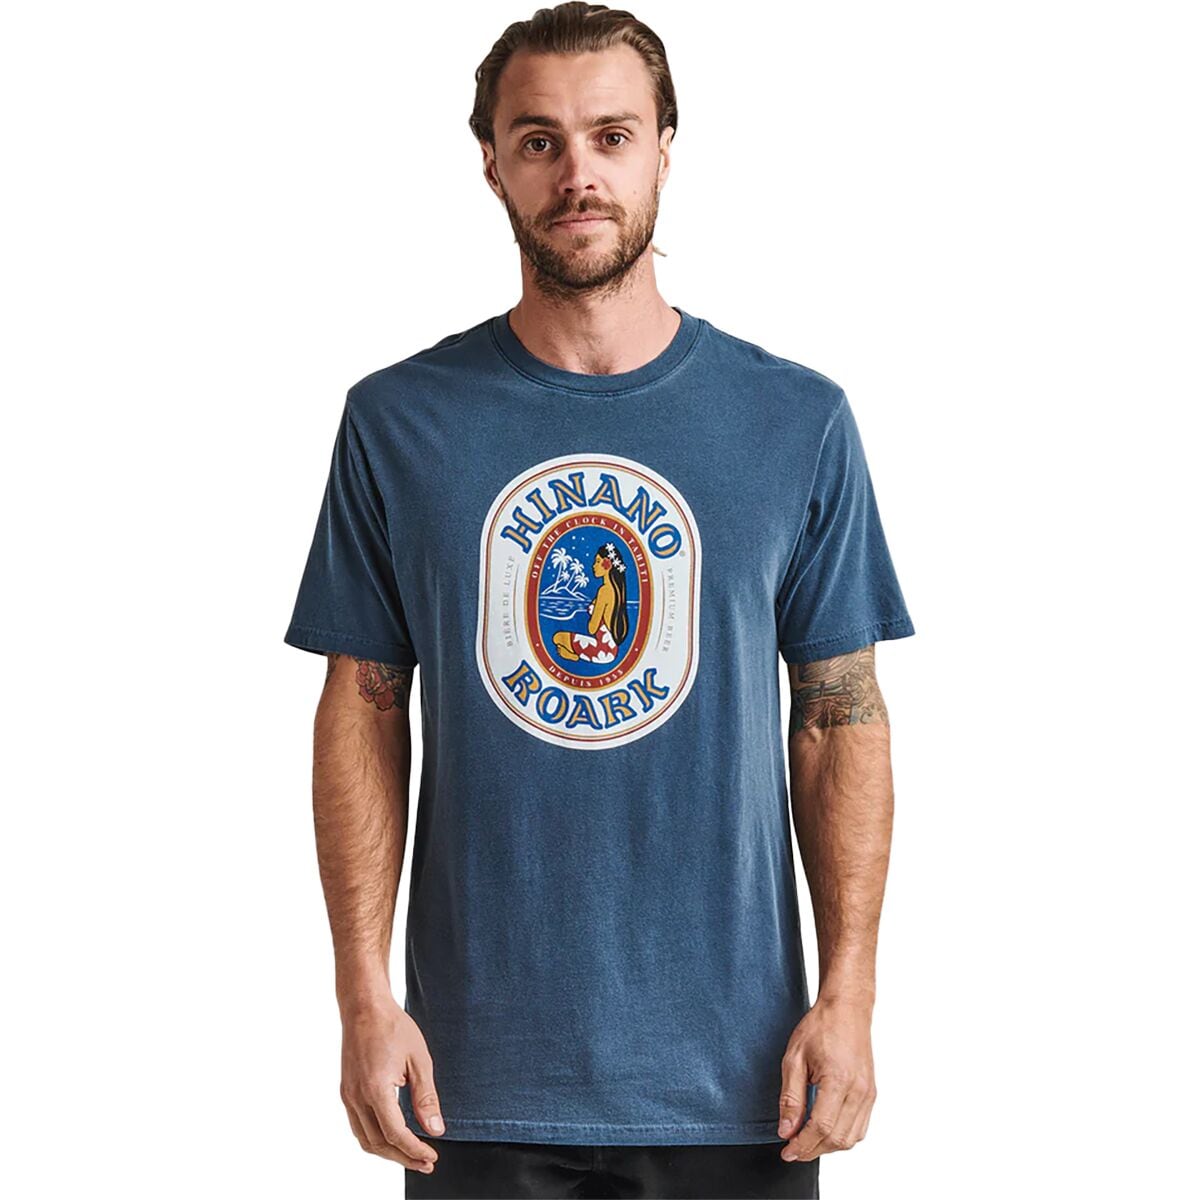 Roark Hinano Label T-Shirt - Men's